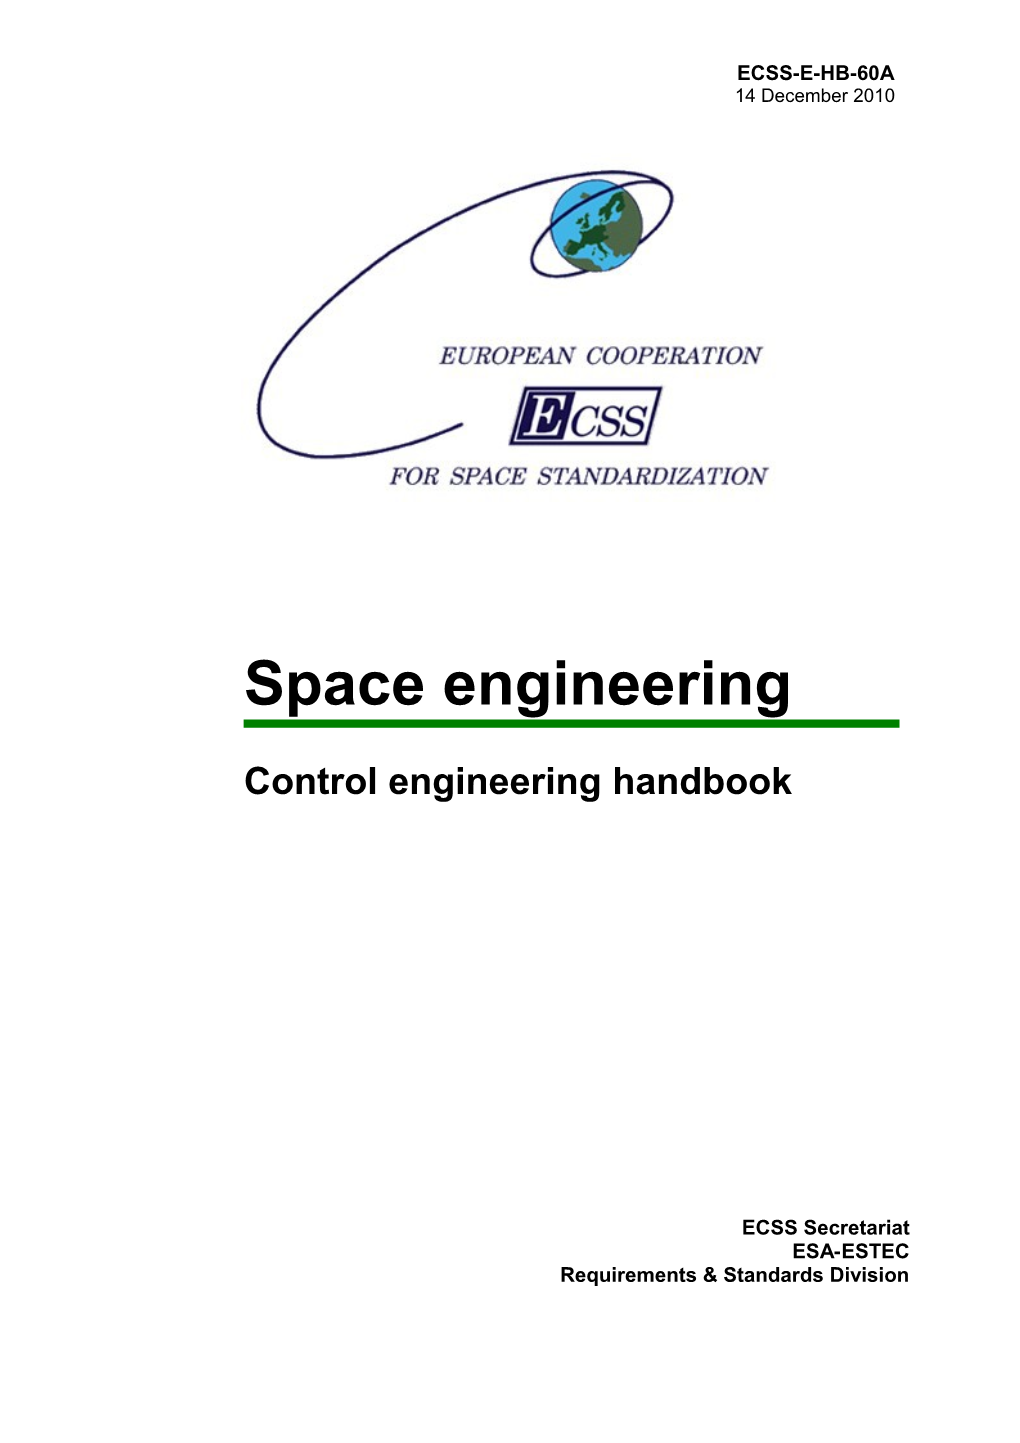 Control Engineering Handbook